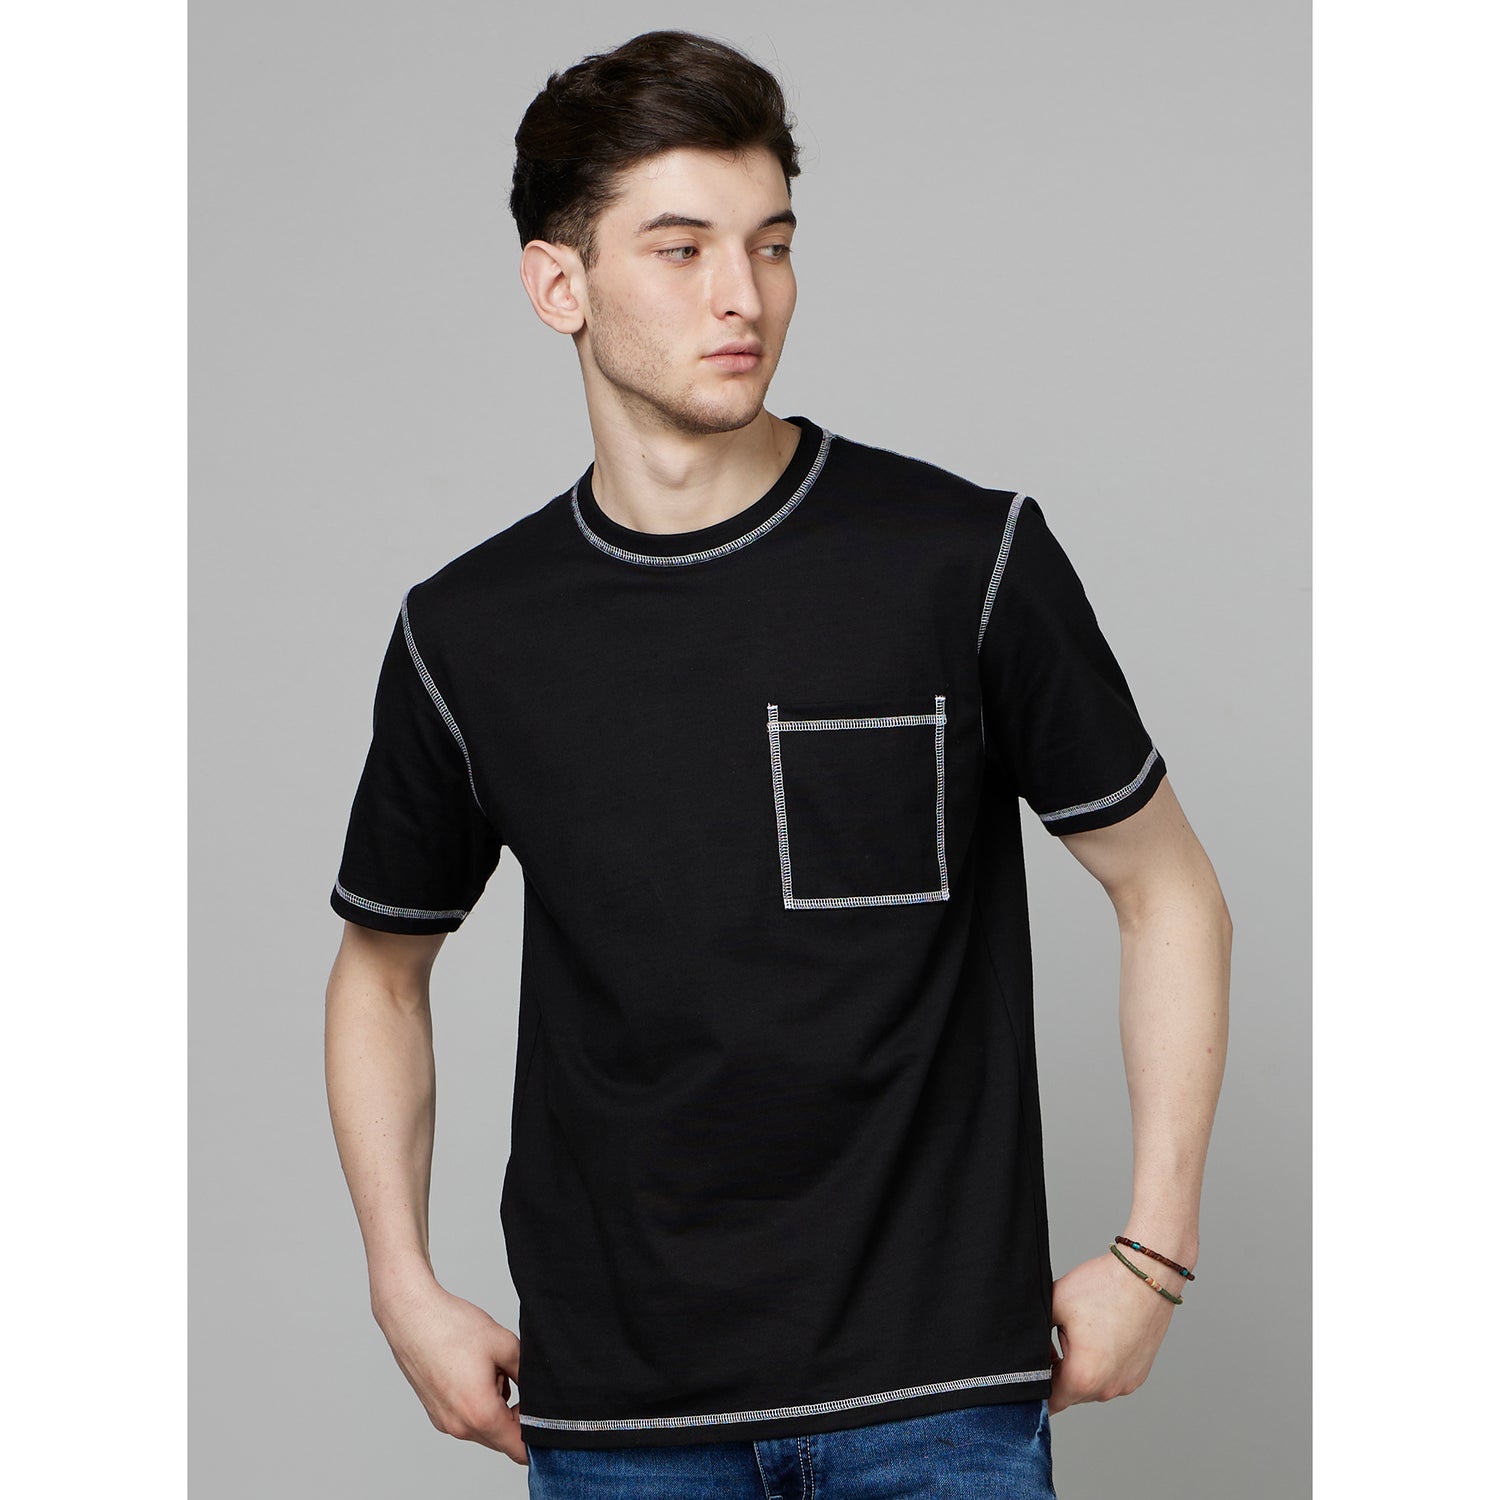 Black Round Neck Cotton T-shirt (FECONTRAST)